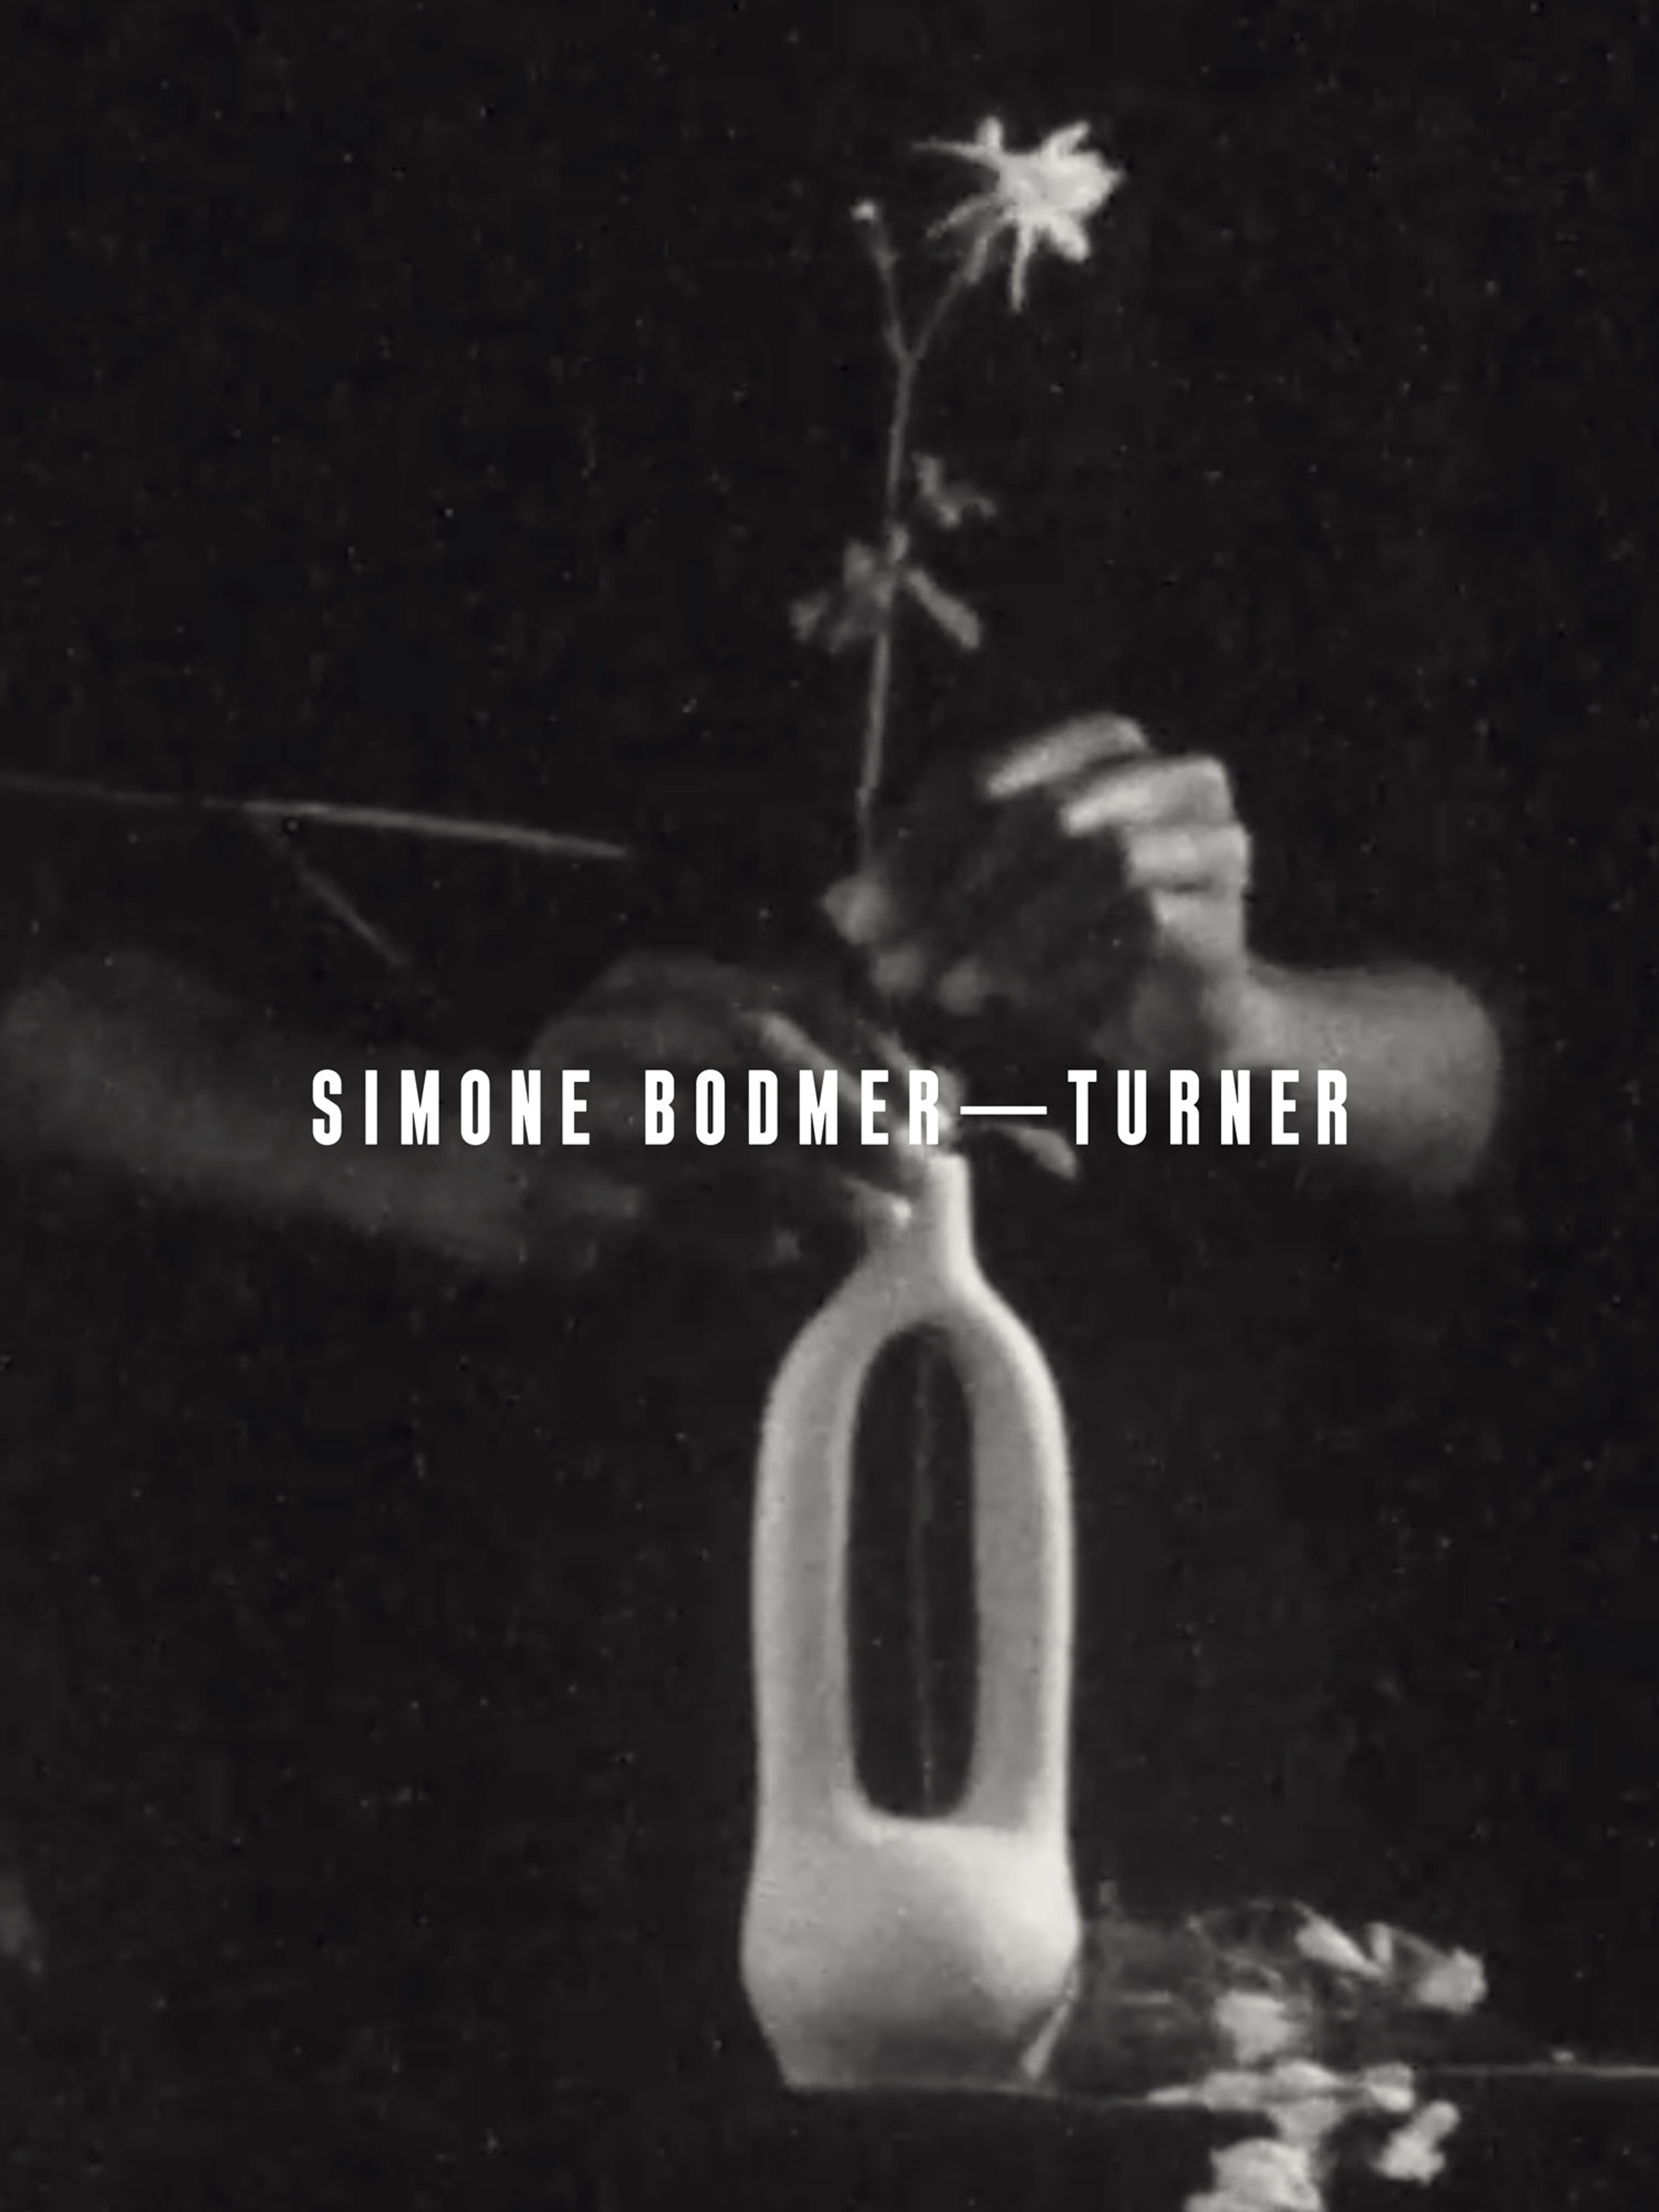 Simone Bodmer-Turner